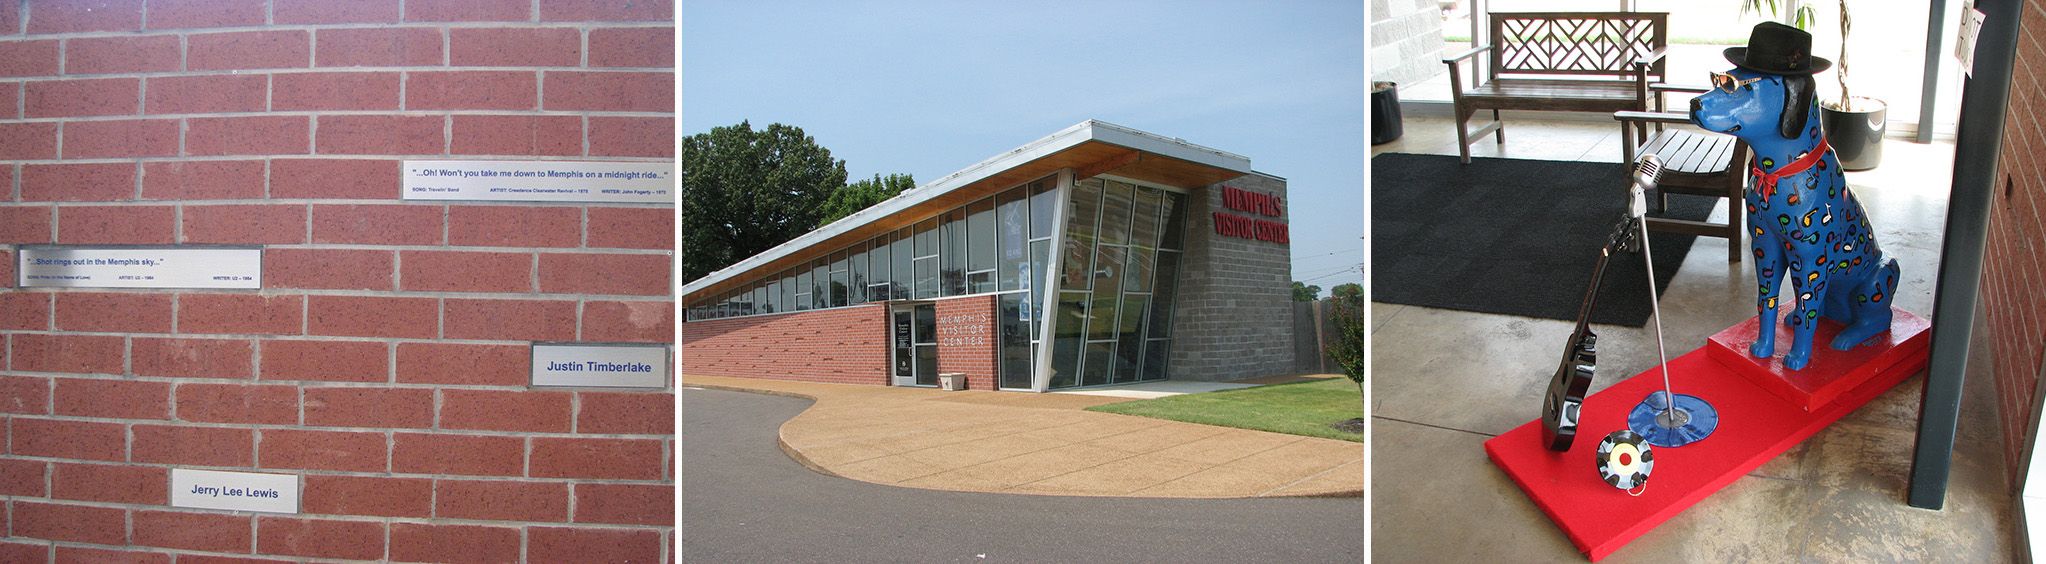 Memphis Visitor Center